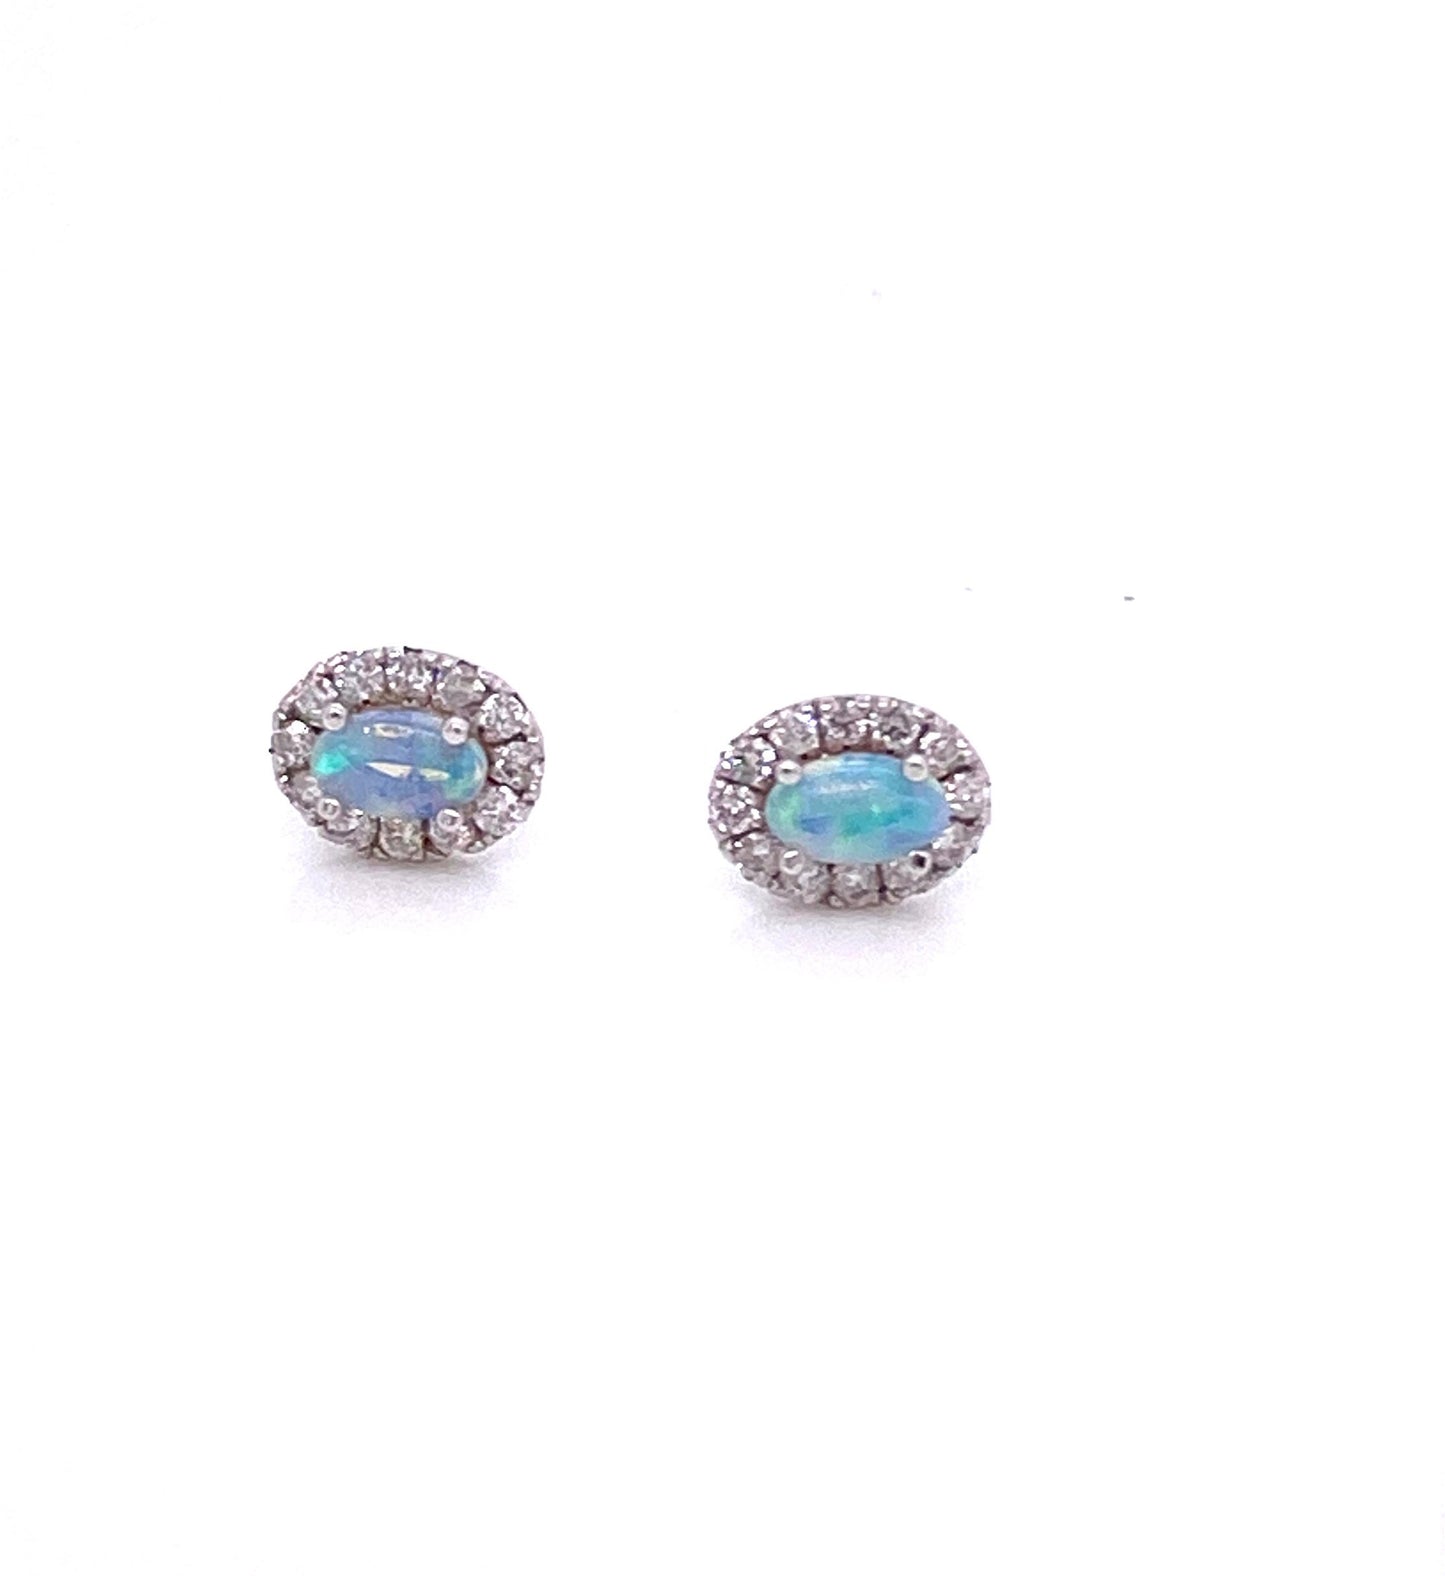 Oval Opal Earrings with Diamond Halo